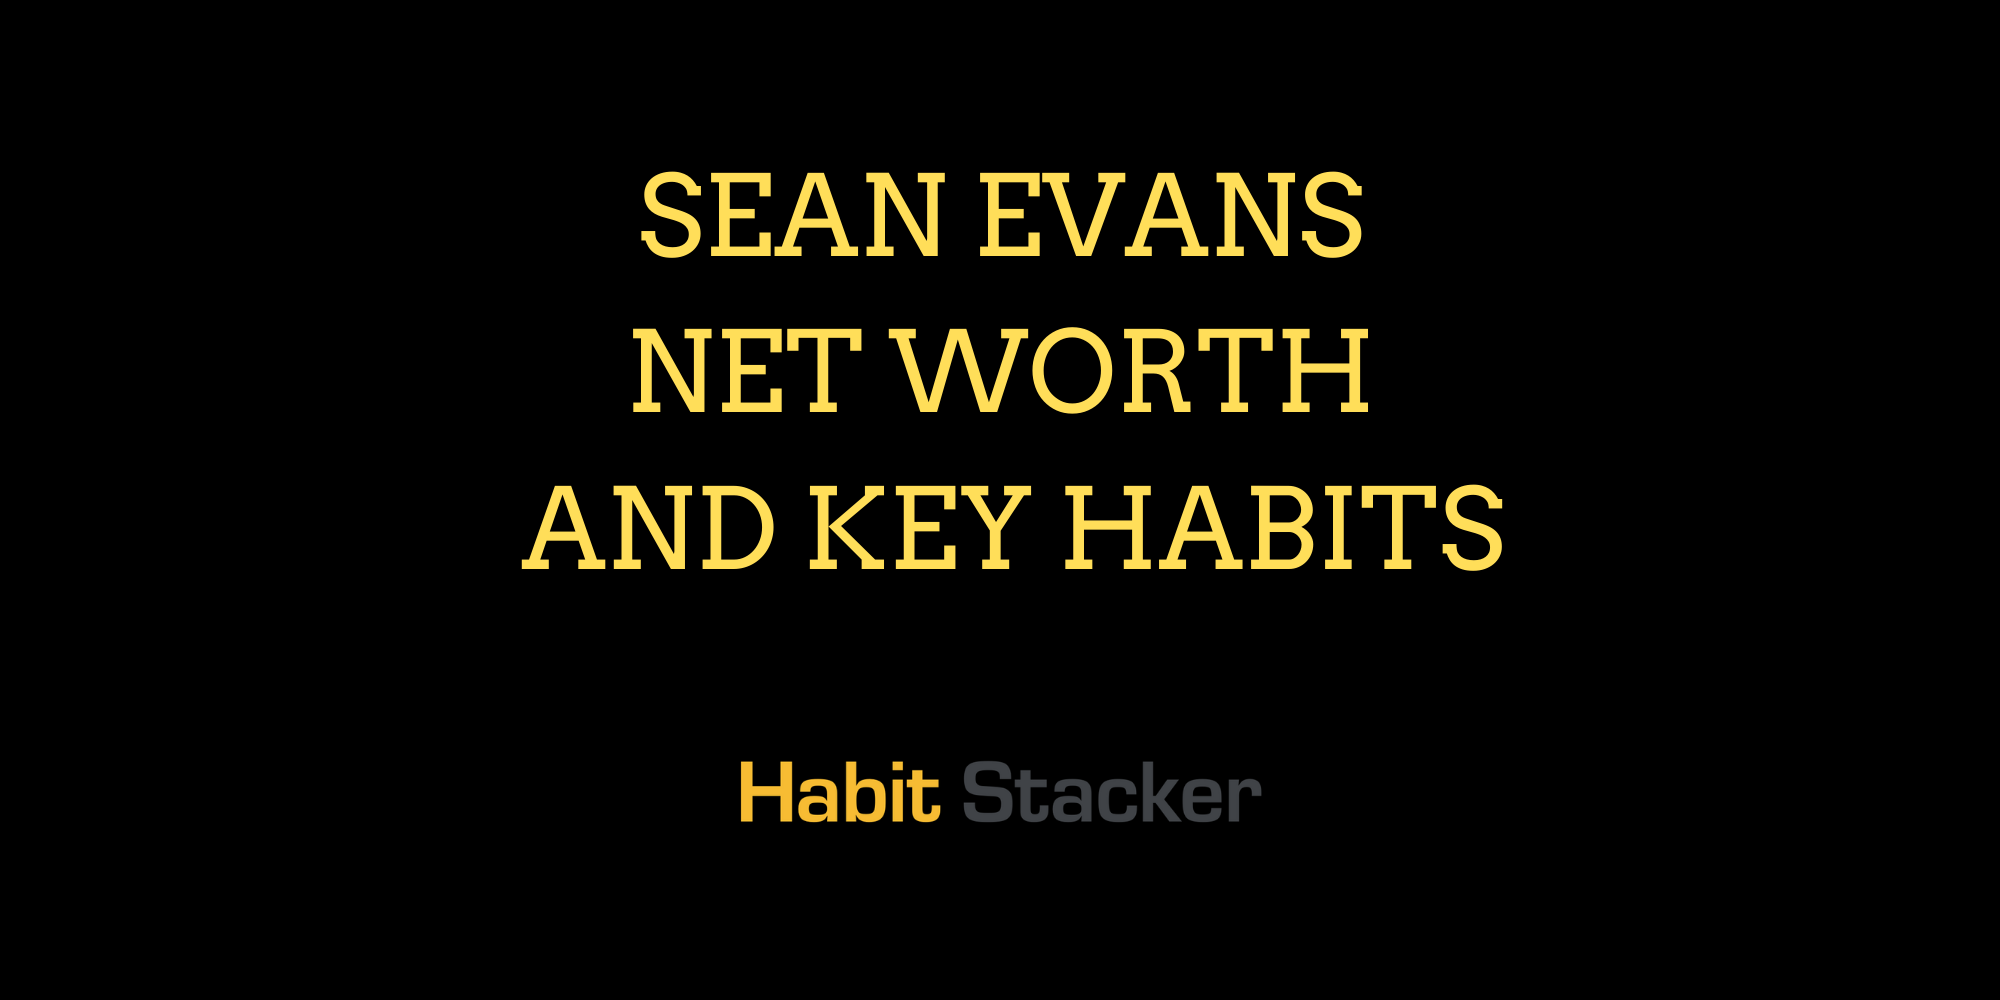 Sean Evans Net Worth And Key Habits